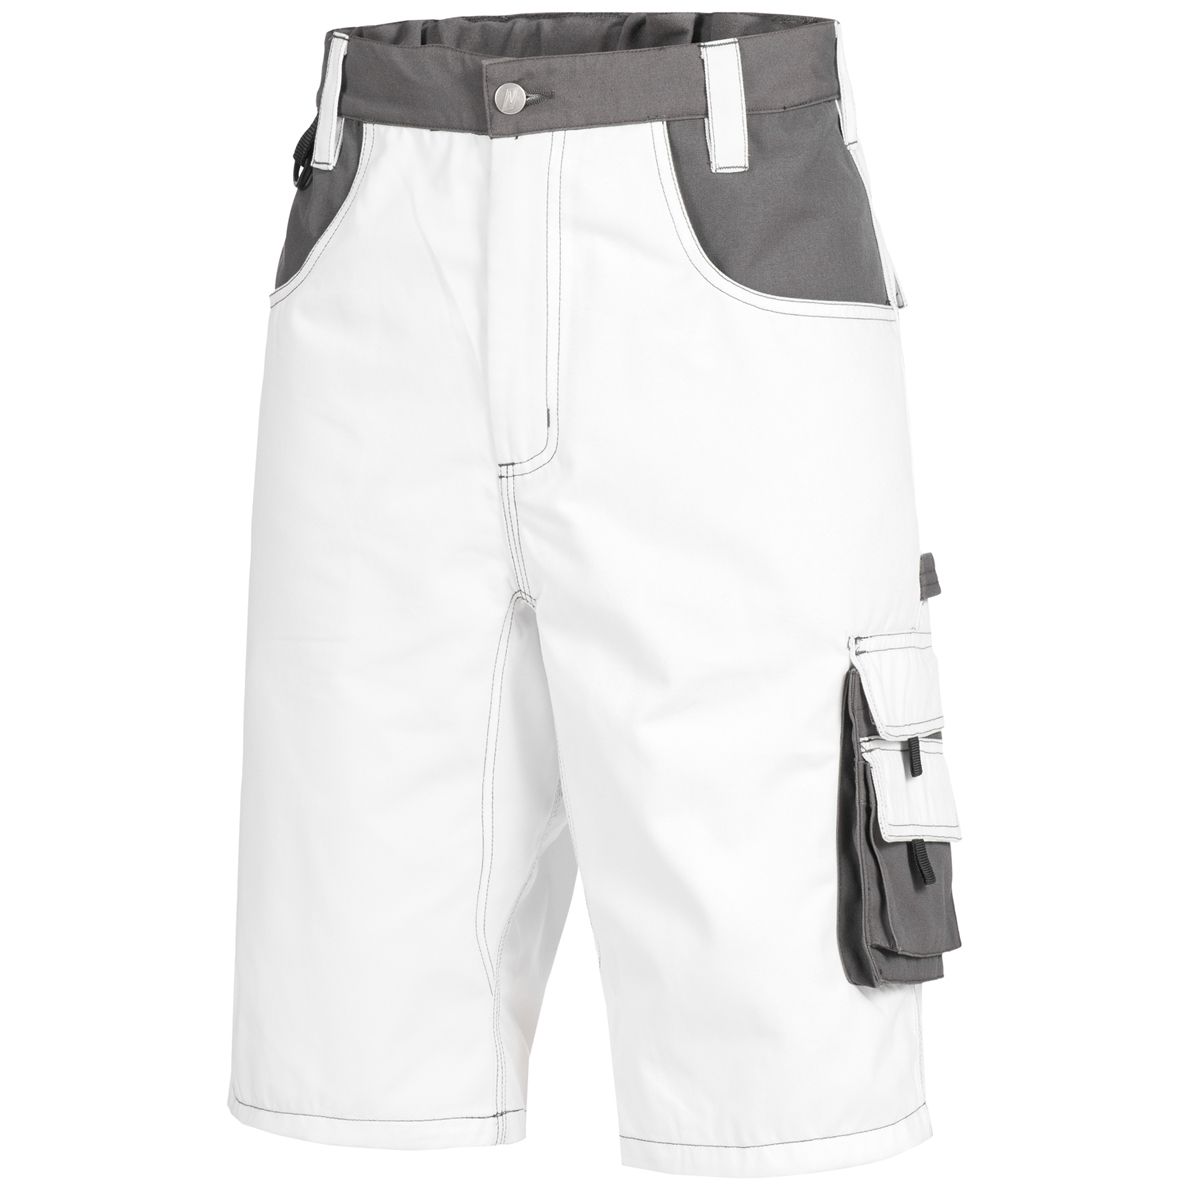 NITRAS MOTION TEX PLUS 7603 Work shorts - Shorts for work - 35% cotton - White - 54